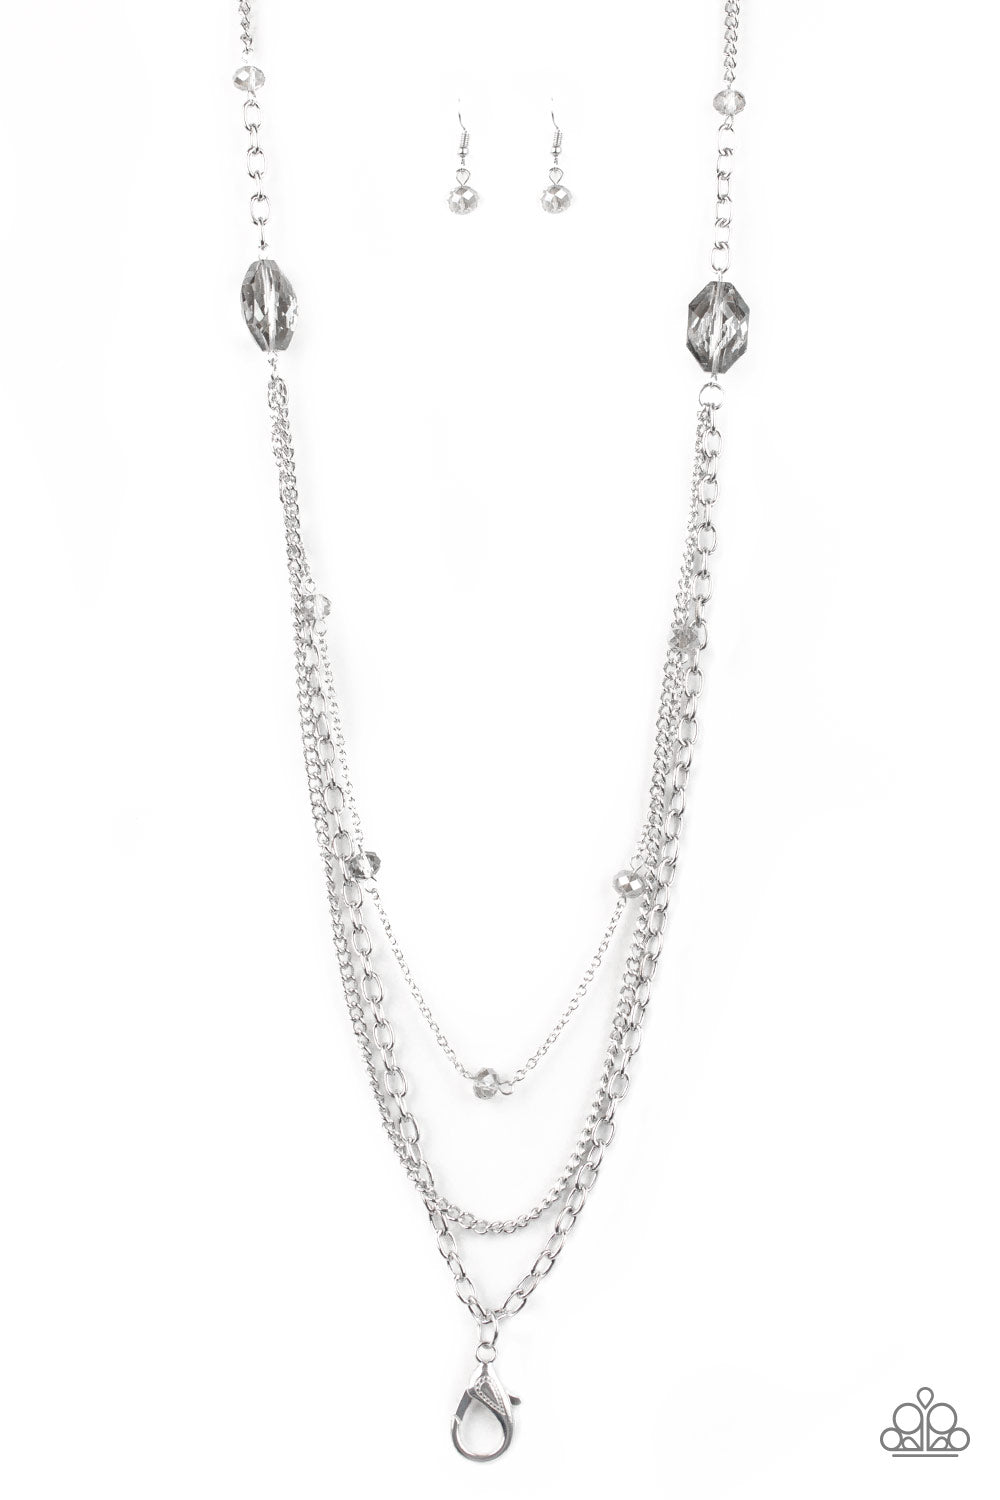 Dare To Dazzle - Silver Necklace Lanyard